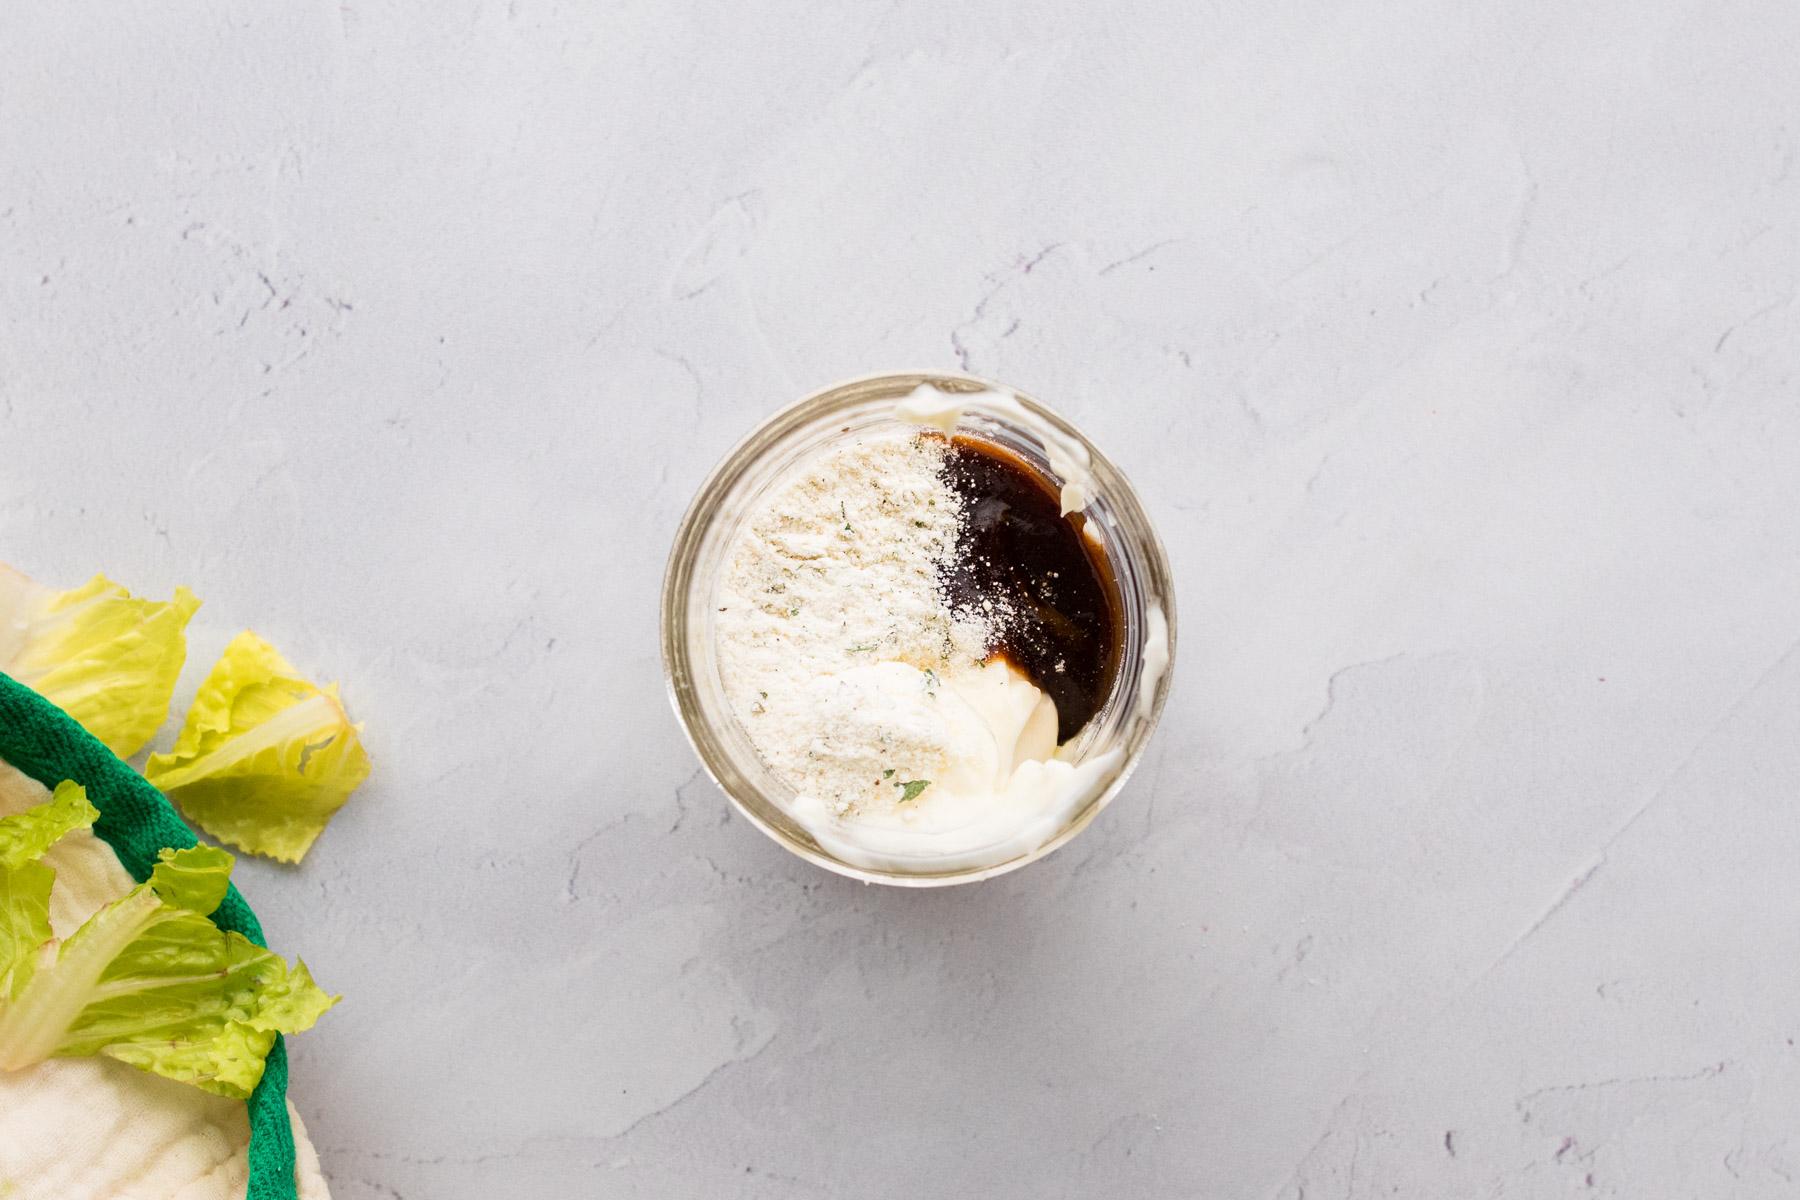 mayo, plain Greek yogurt, BBQ sauce, and ranch dressing powder in a glass jar